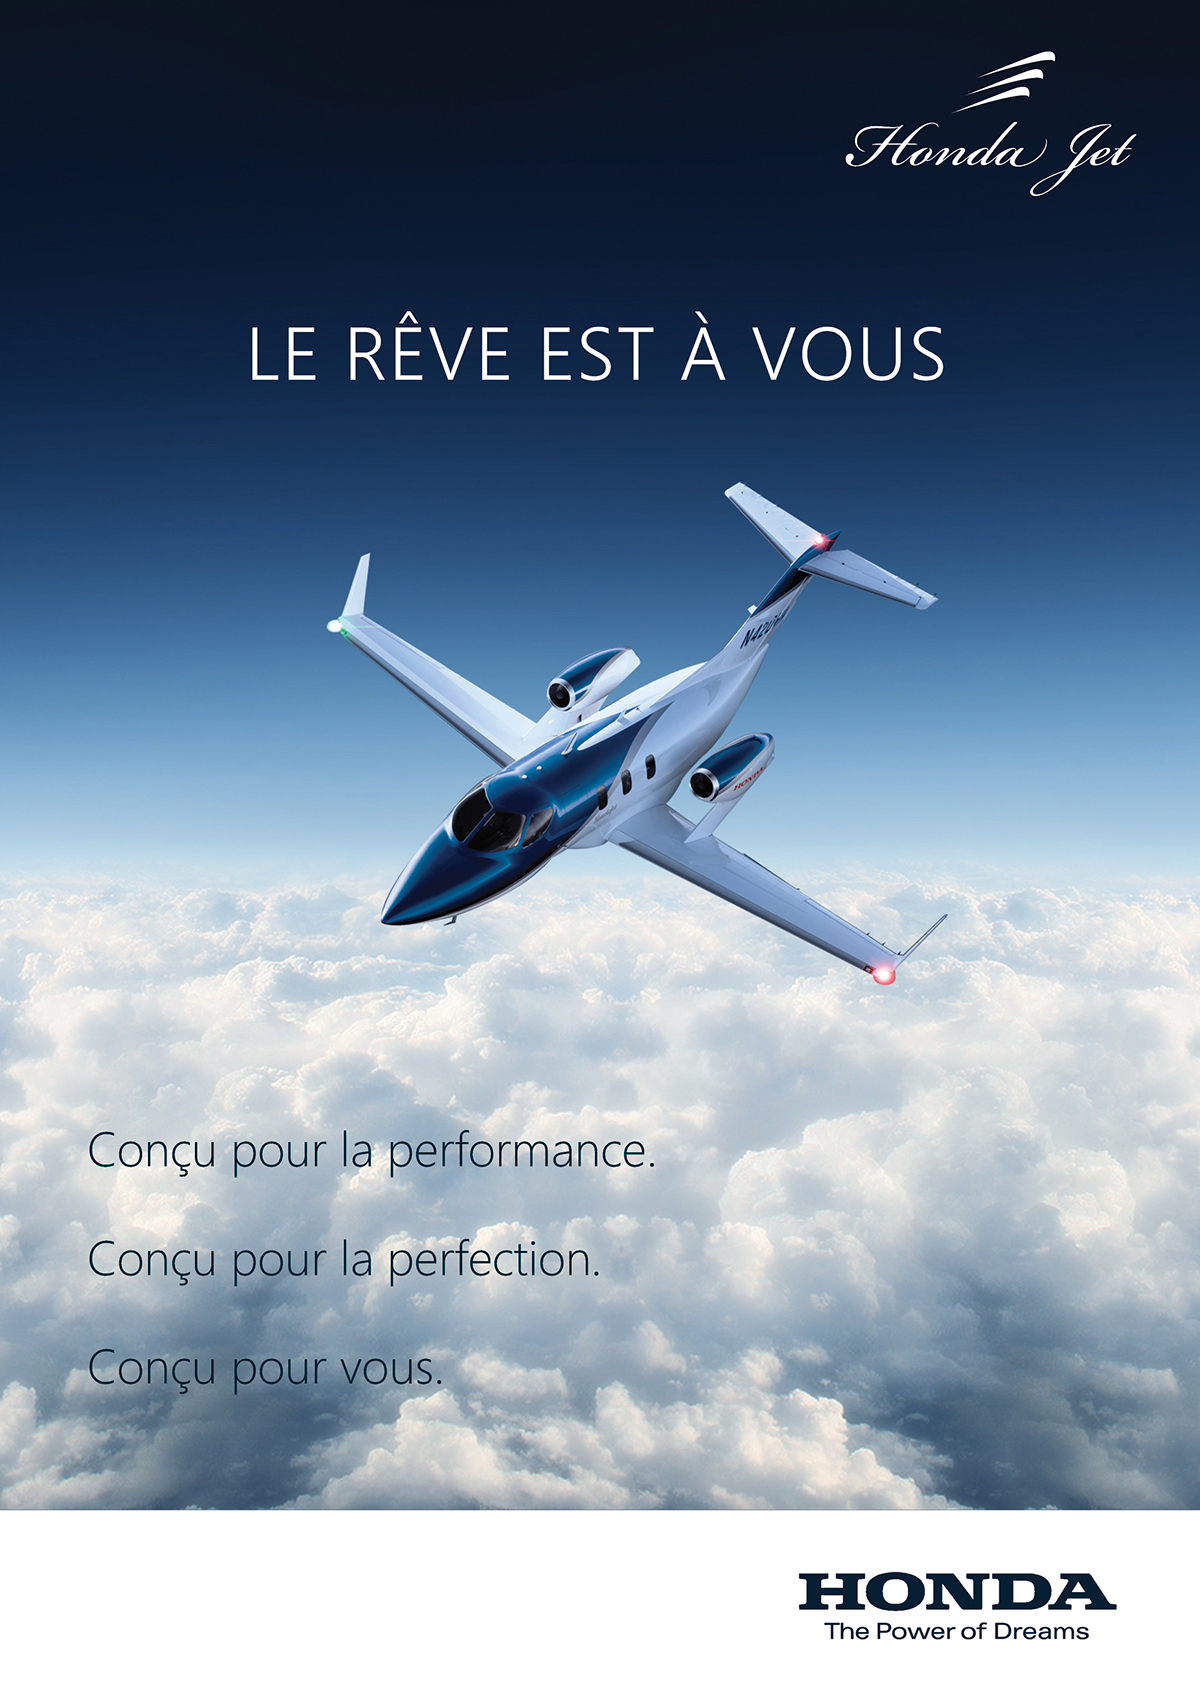 Honda Jet avion SKY plane ciel cloud luxe blue world engine